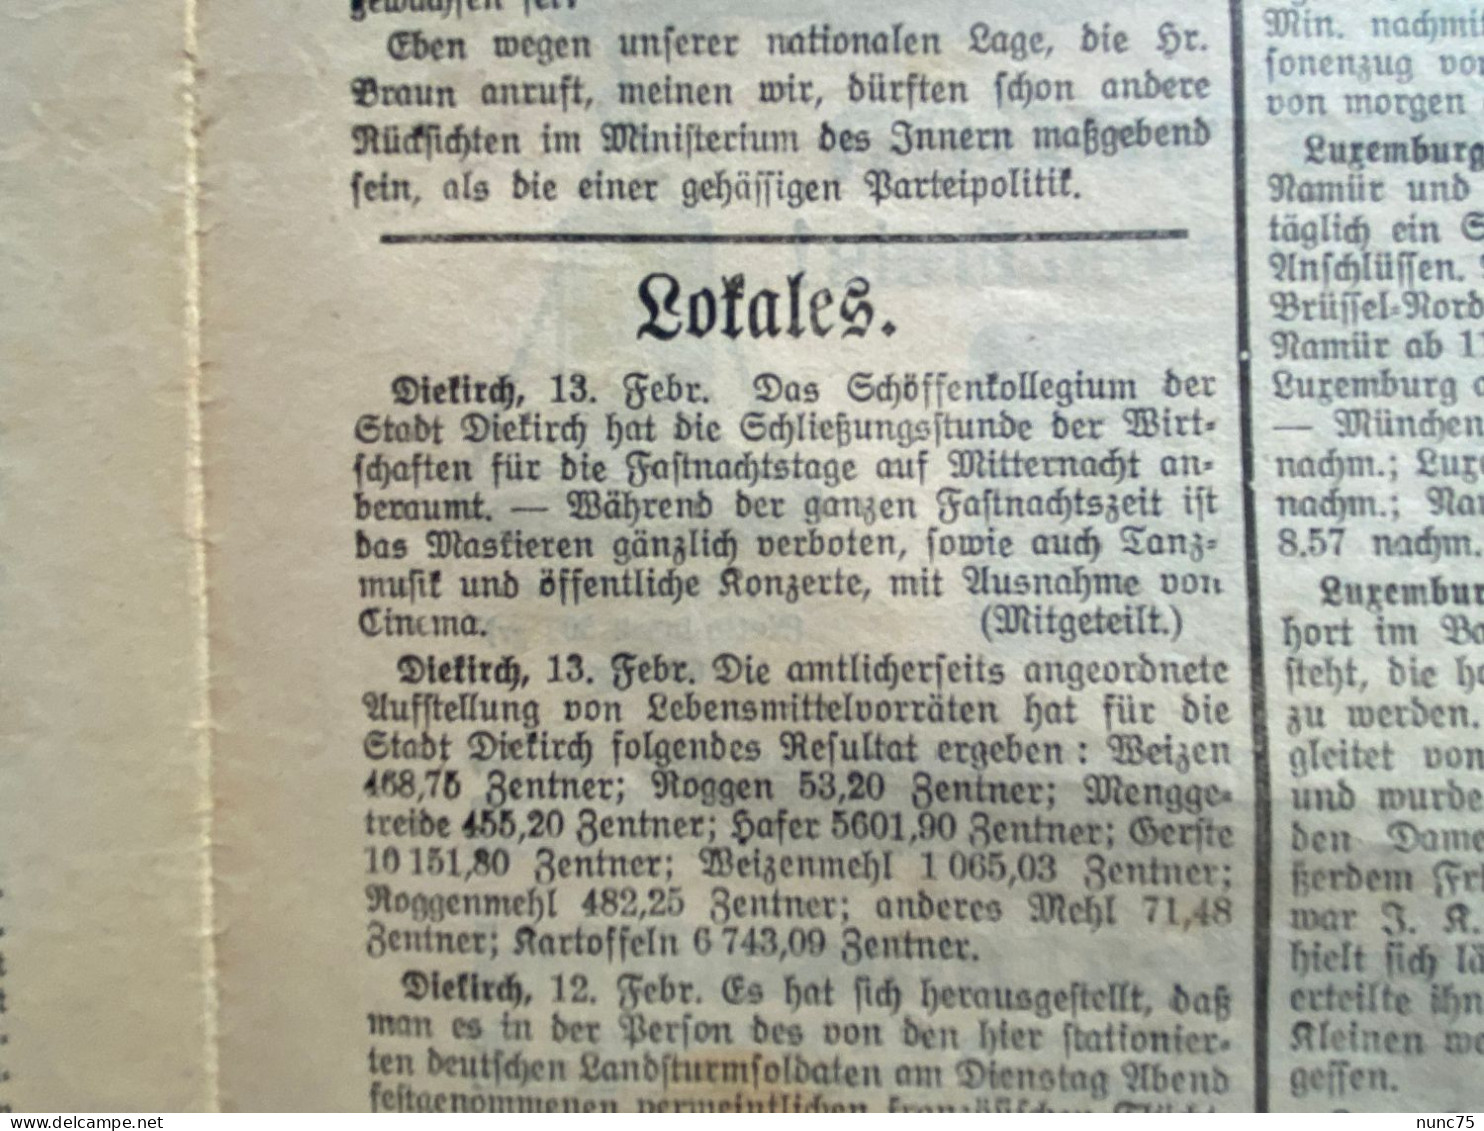 ••  NEW ••  DIEKIRCH  DER FORTSCHRITT 1915  Druck Pierre CARIERS  Luxembourg journal Zeitung no Schroell